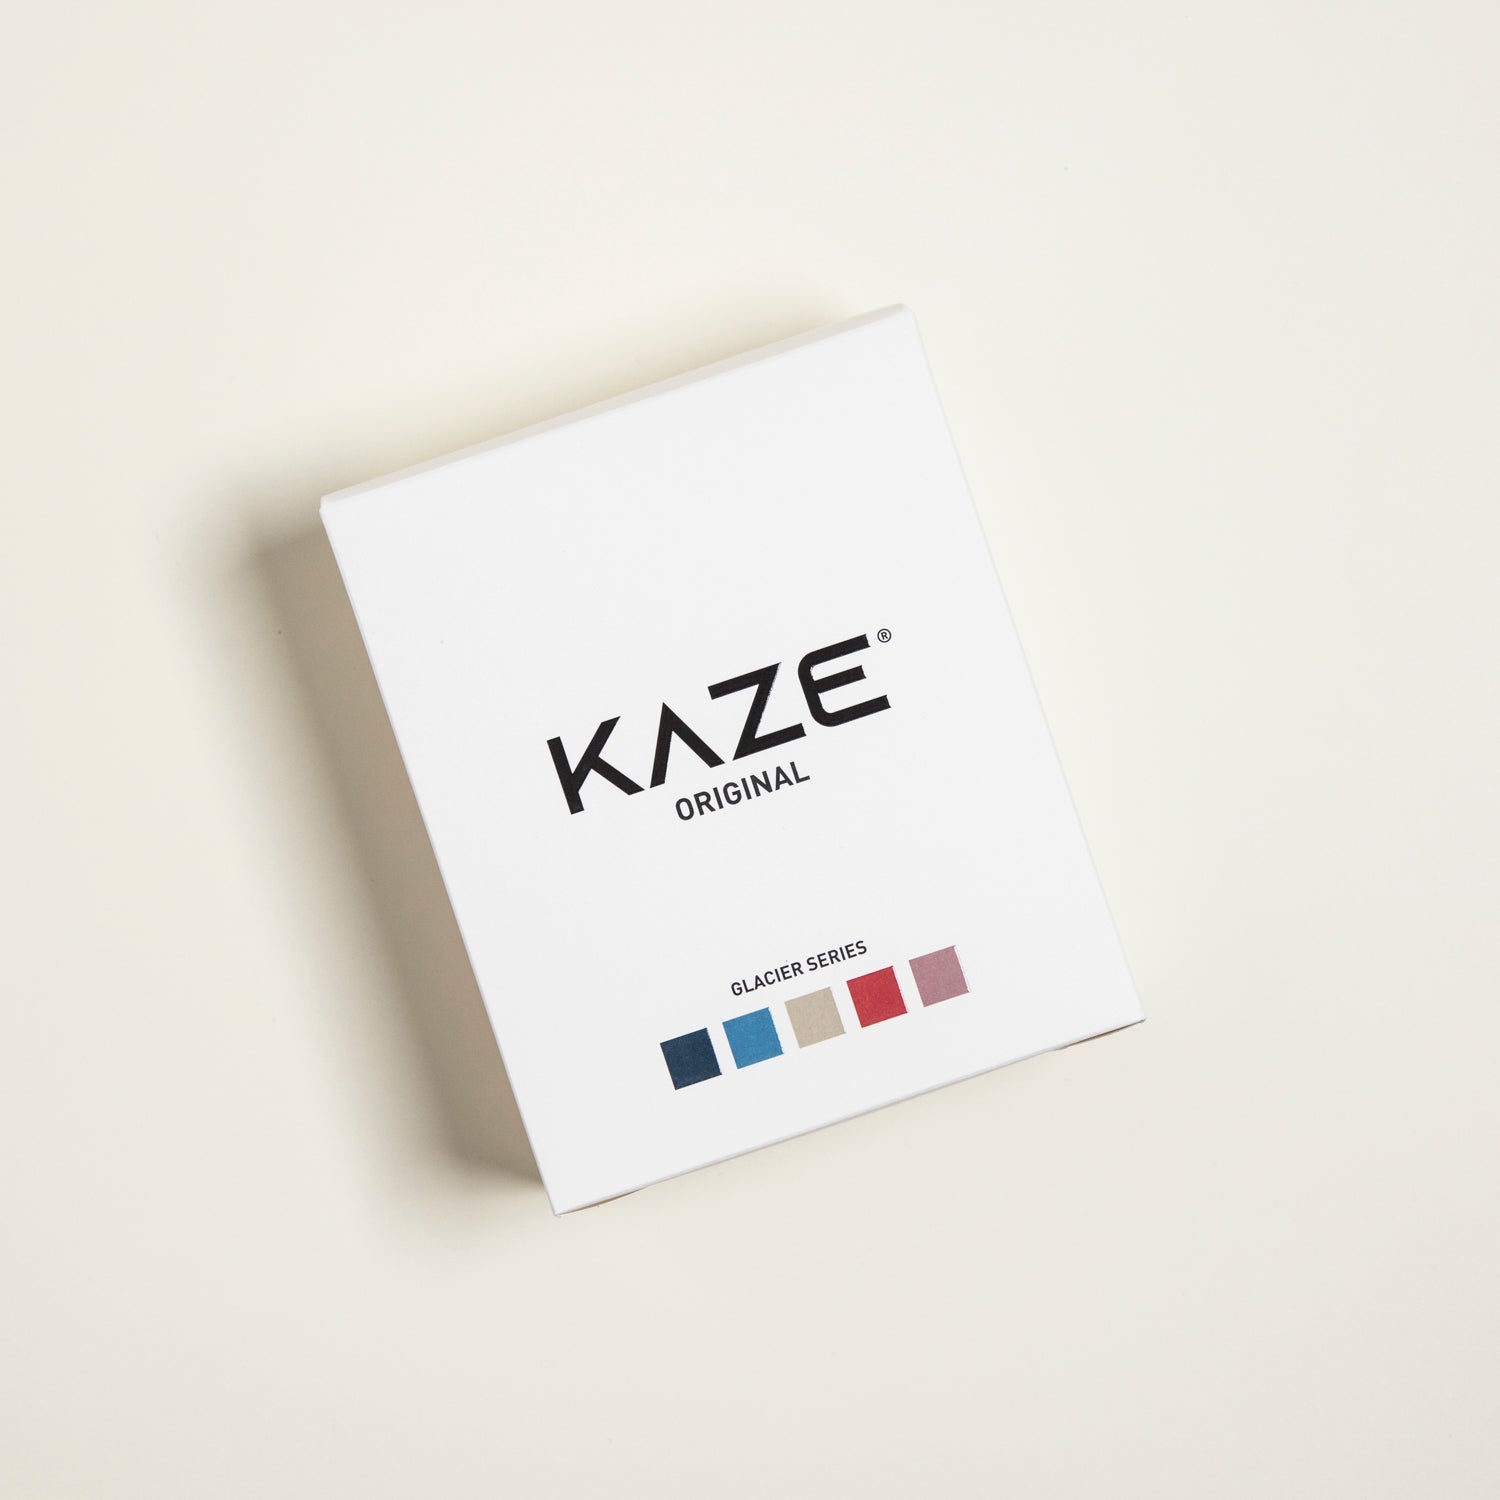 KAZE Mask- Glacier Series